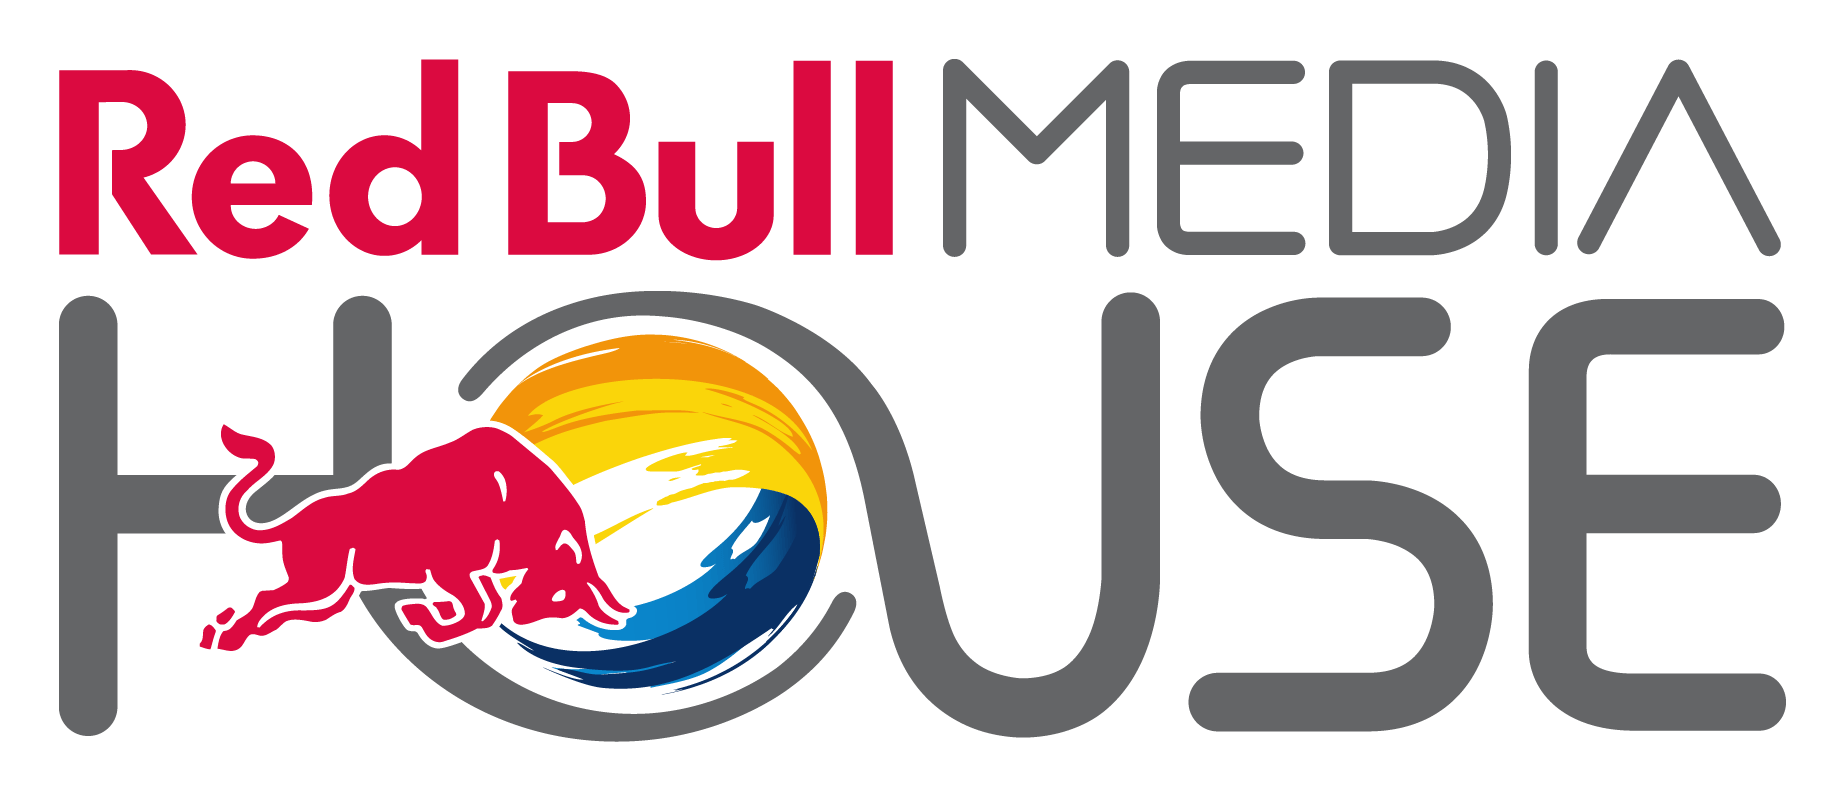 Social Media Entertainment Logo - Multi Platform Media Marketer. Red Bull Media House